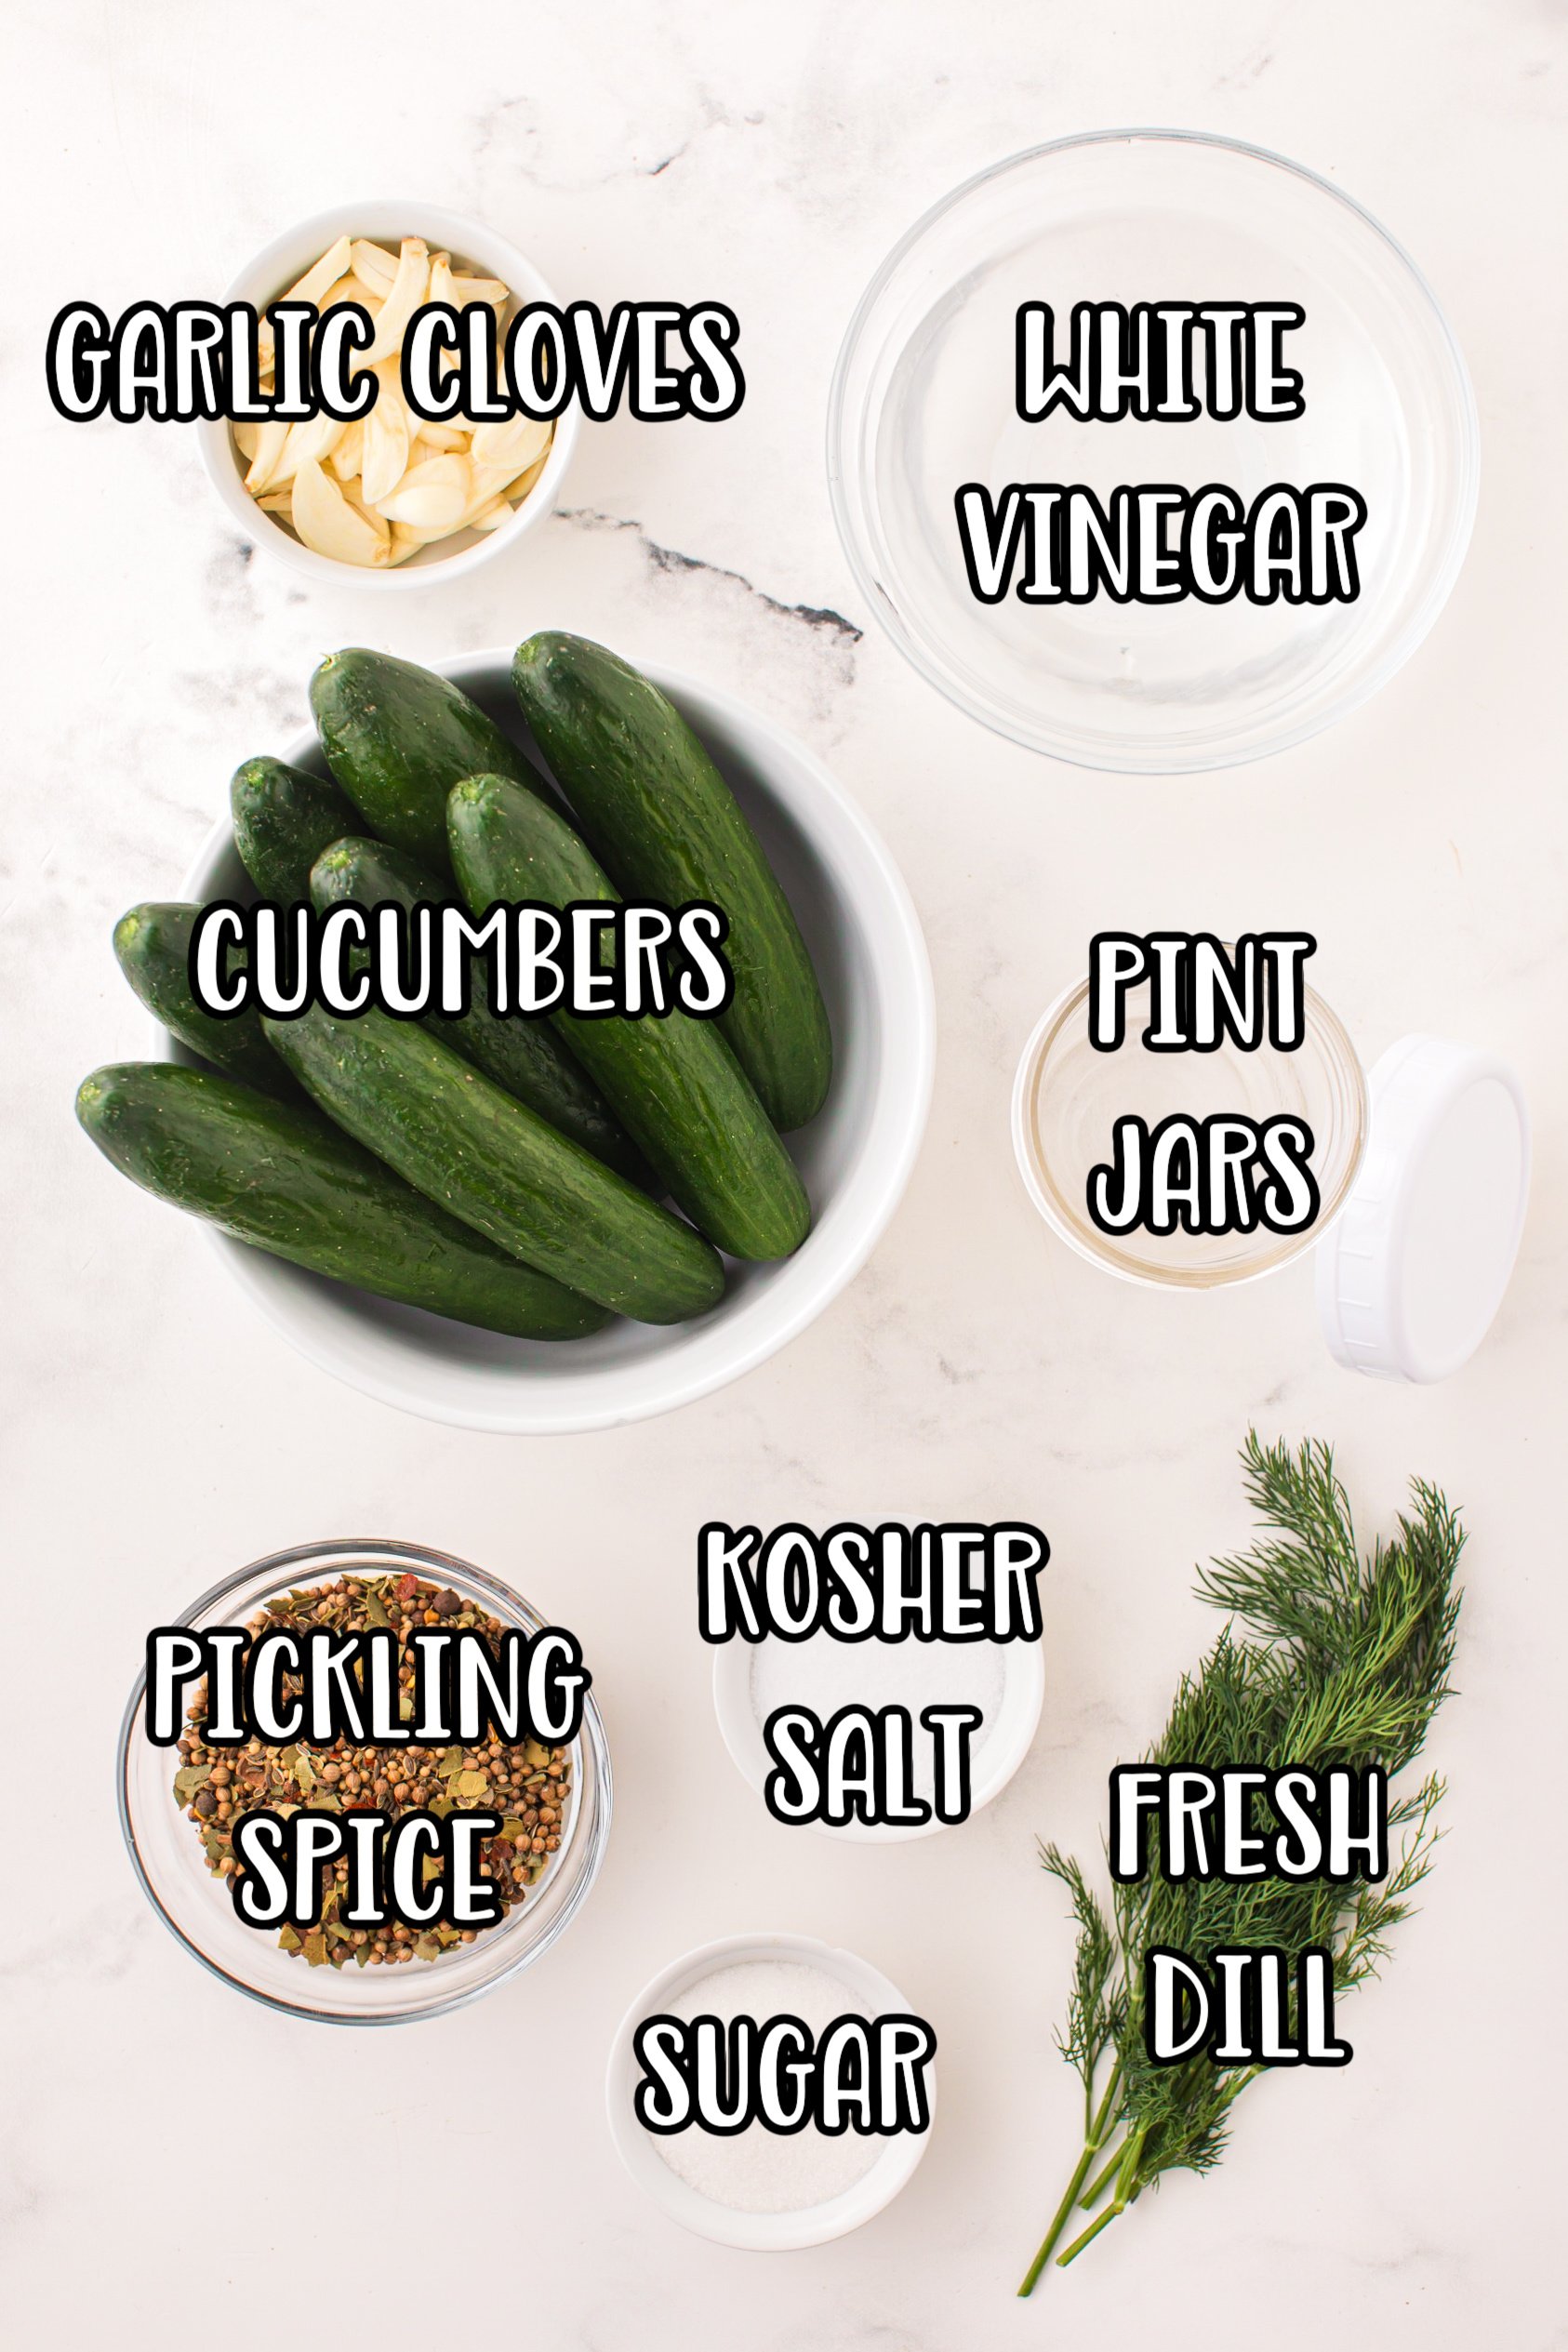 Cucumbers, water, sugar, white vinegar, fresh dill, fresh garlic, salt, and pickling spice.